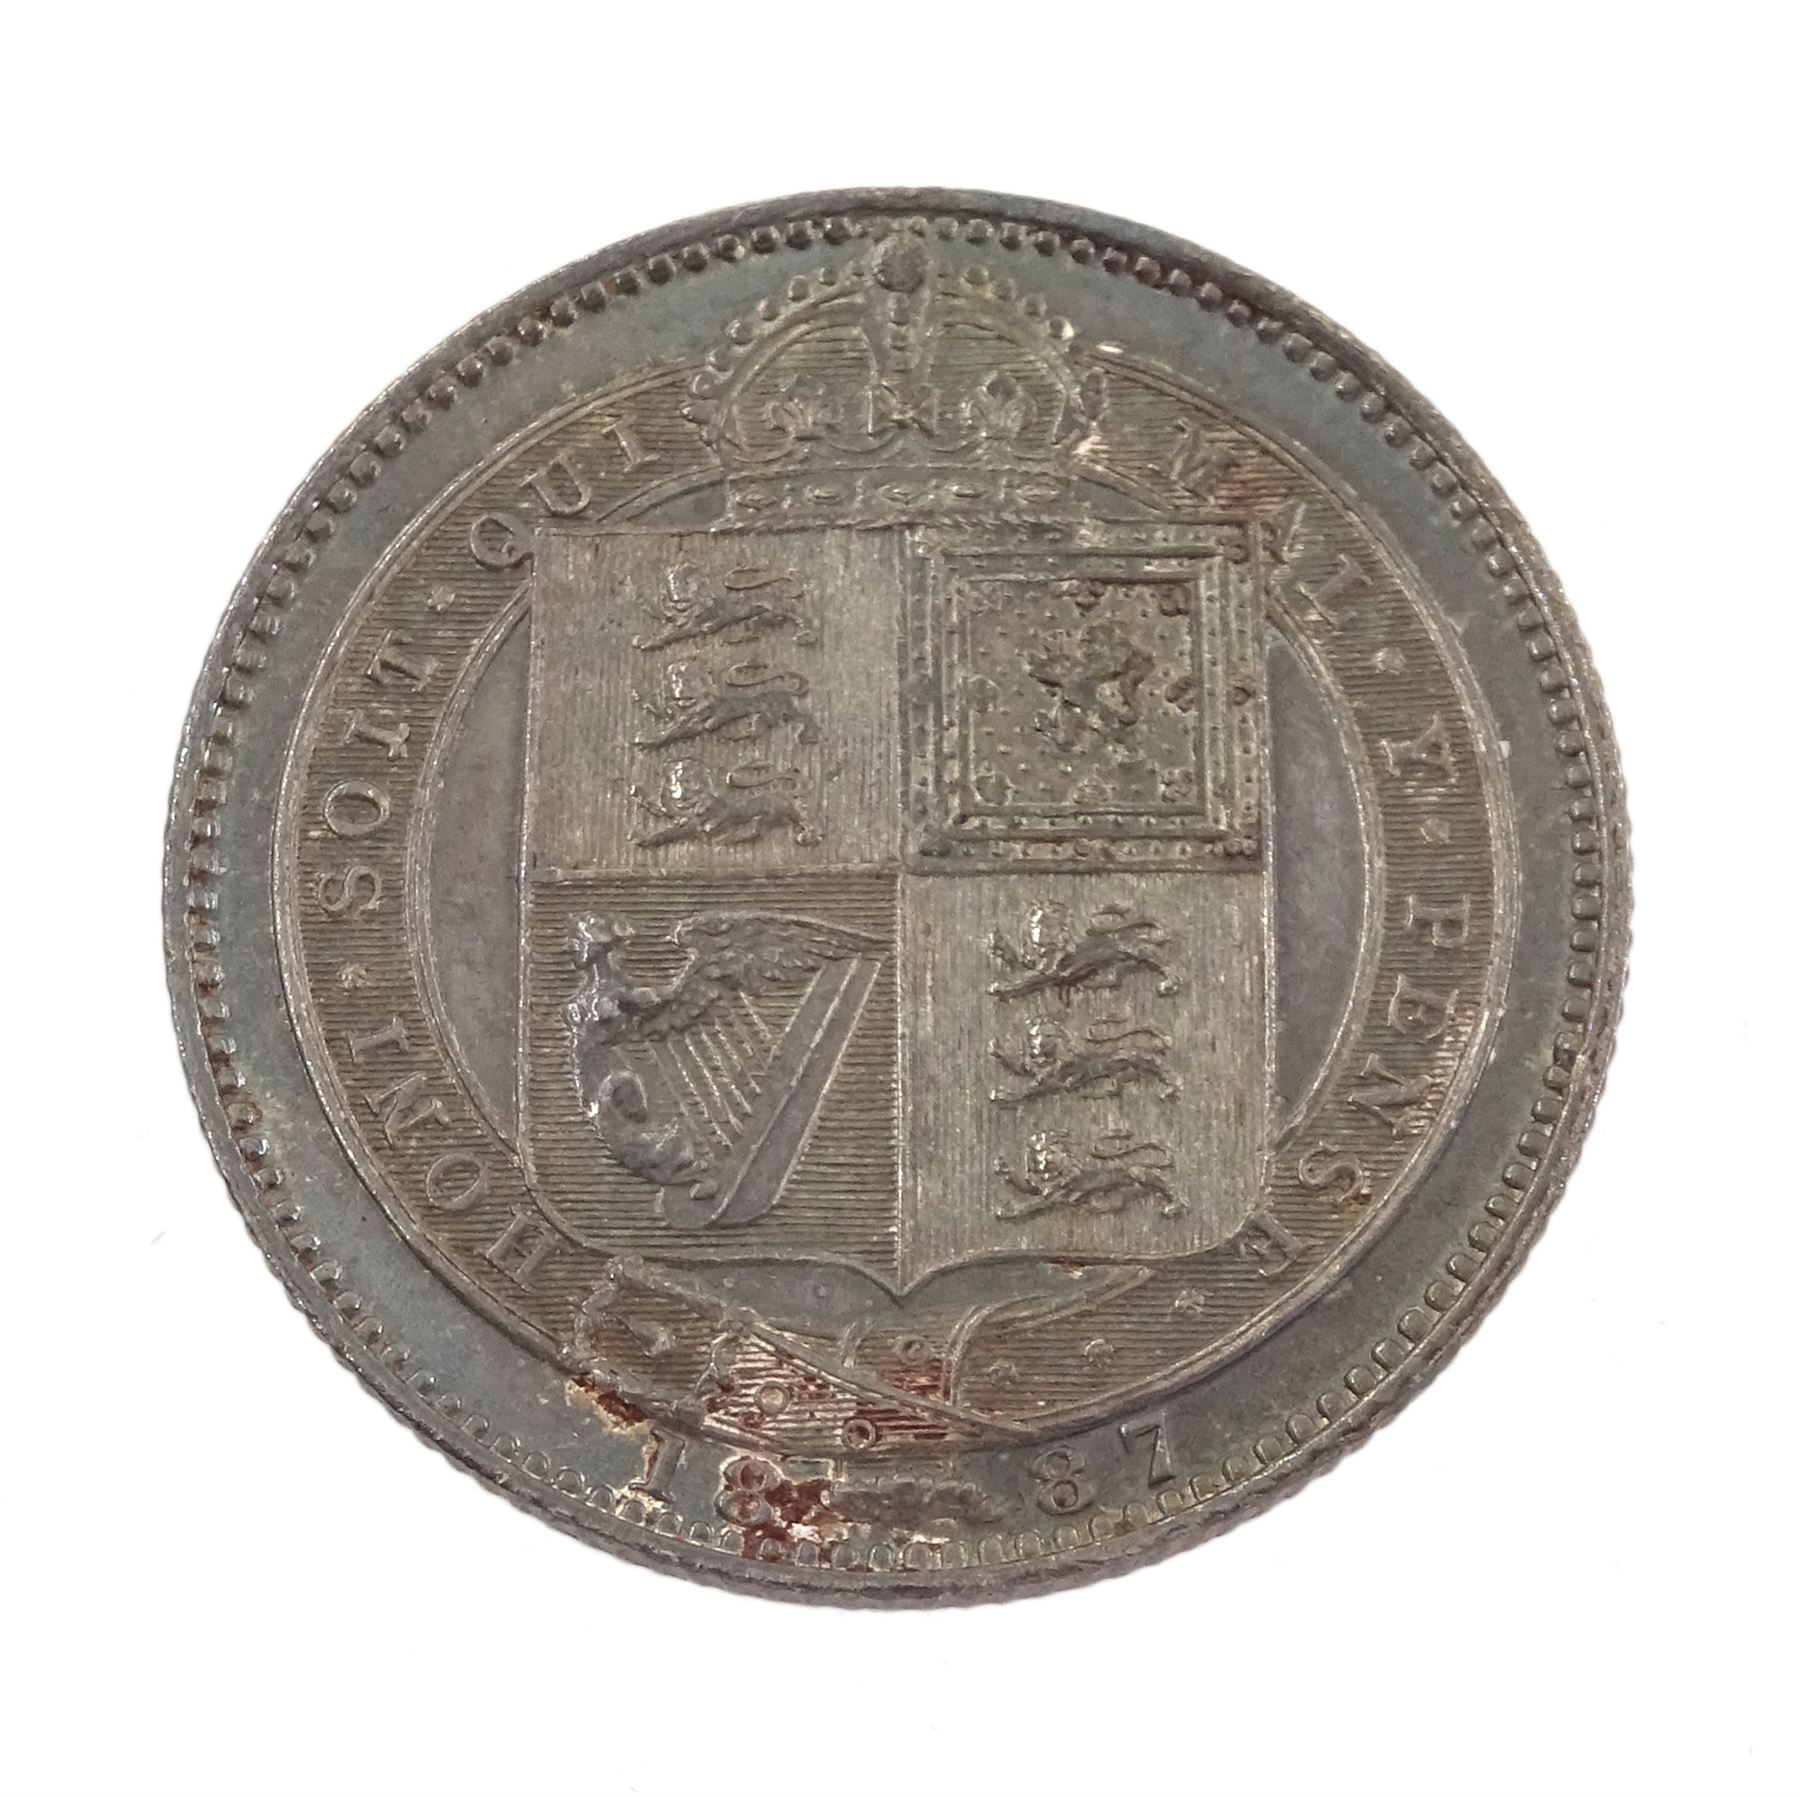 Queen Victoria 1887 specimen coin set - Image 24 of 27